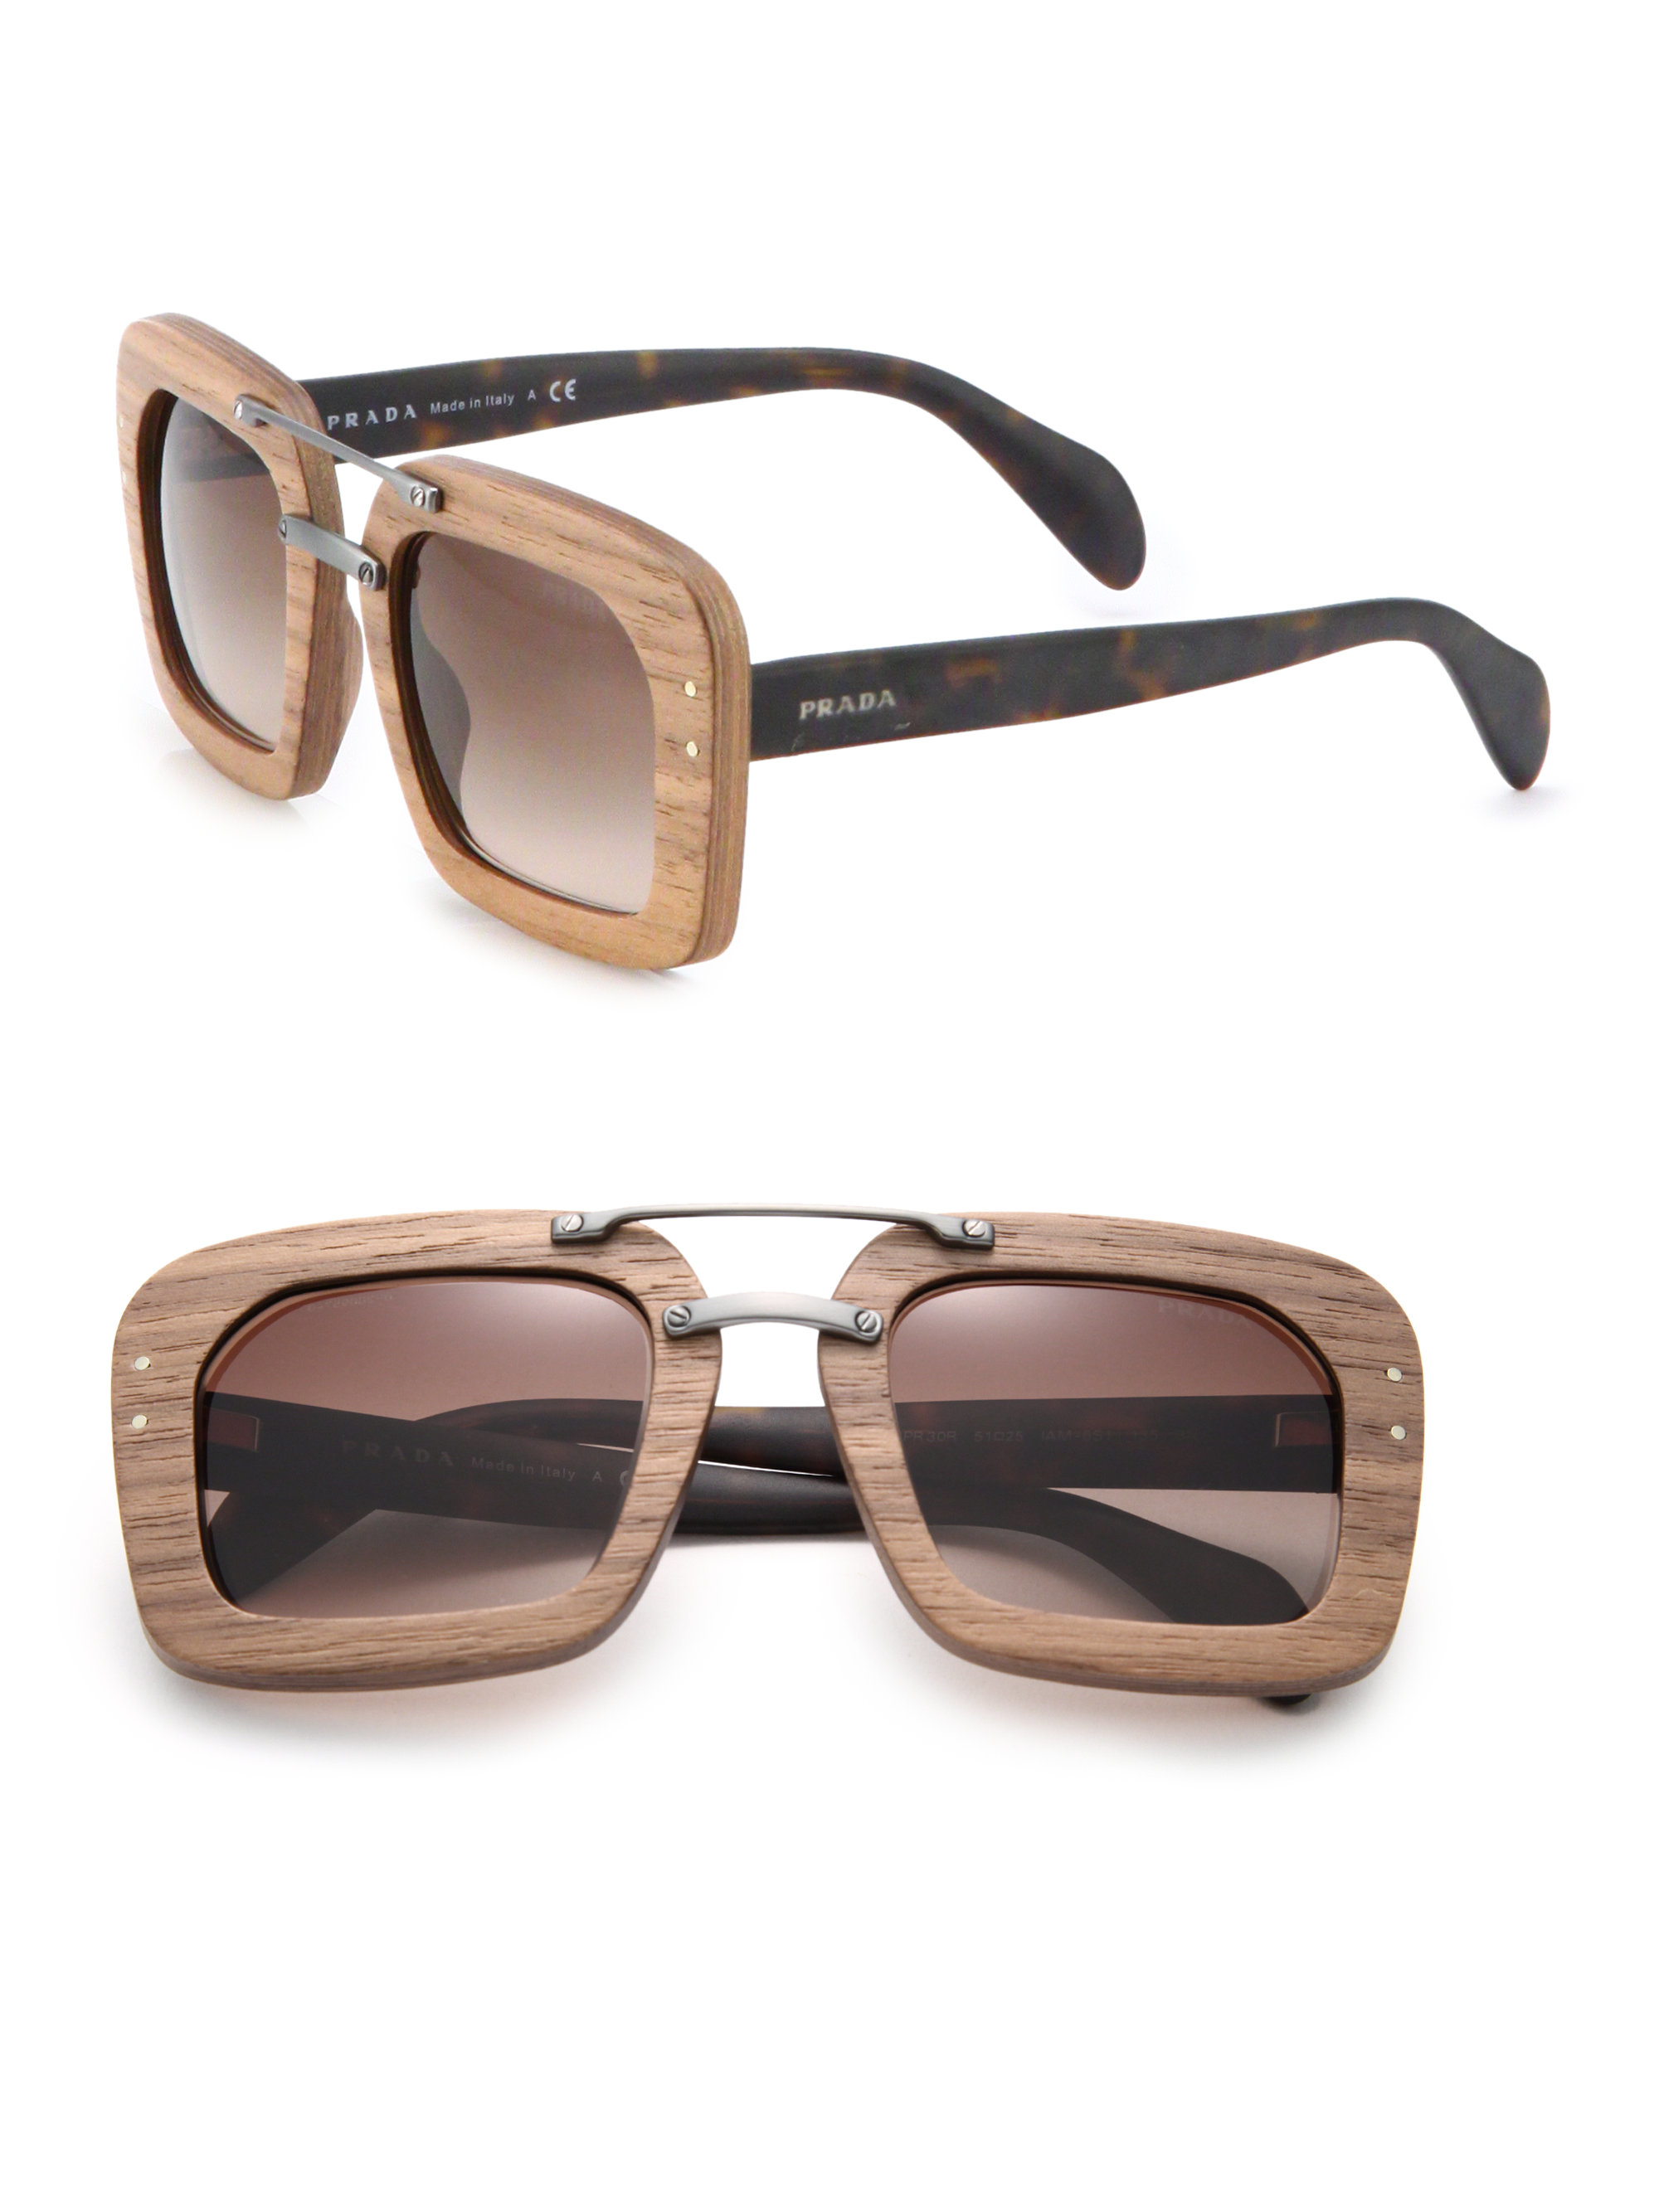 Prada Wooden 51mm Square Sunglasses in Brown (light wood) | Lyst  